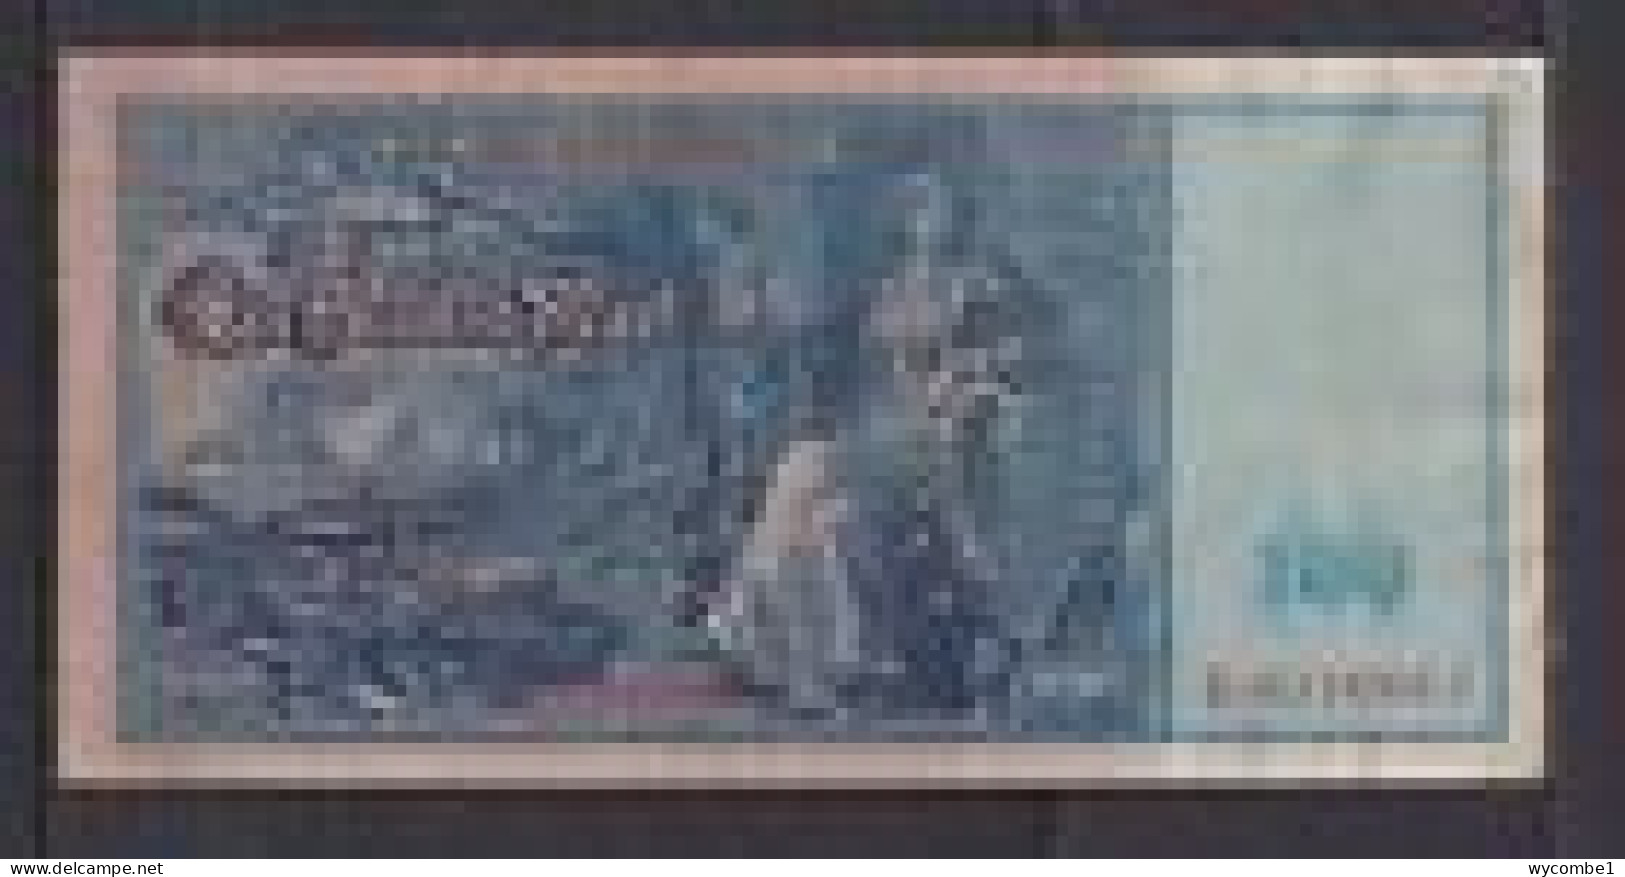 GERMANY - 1910 100 Marks Circulated Banknote - 100 Mark